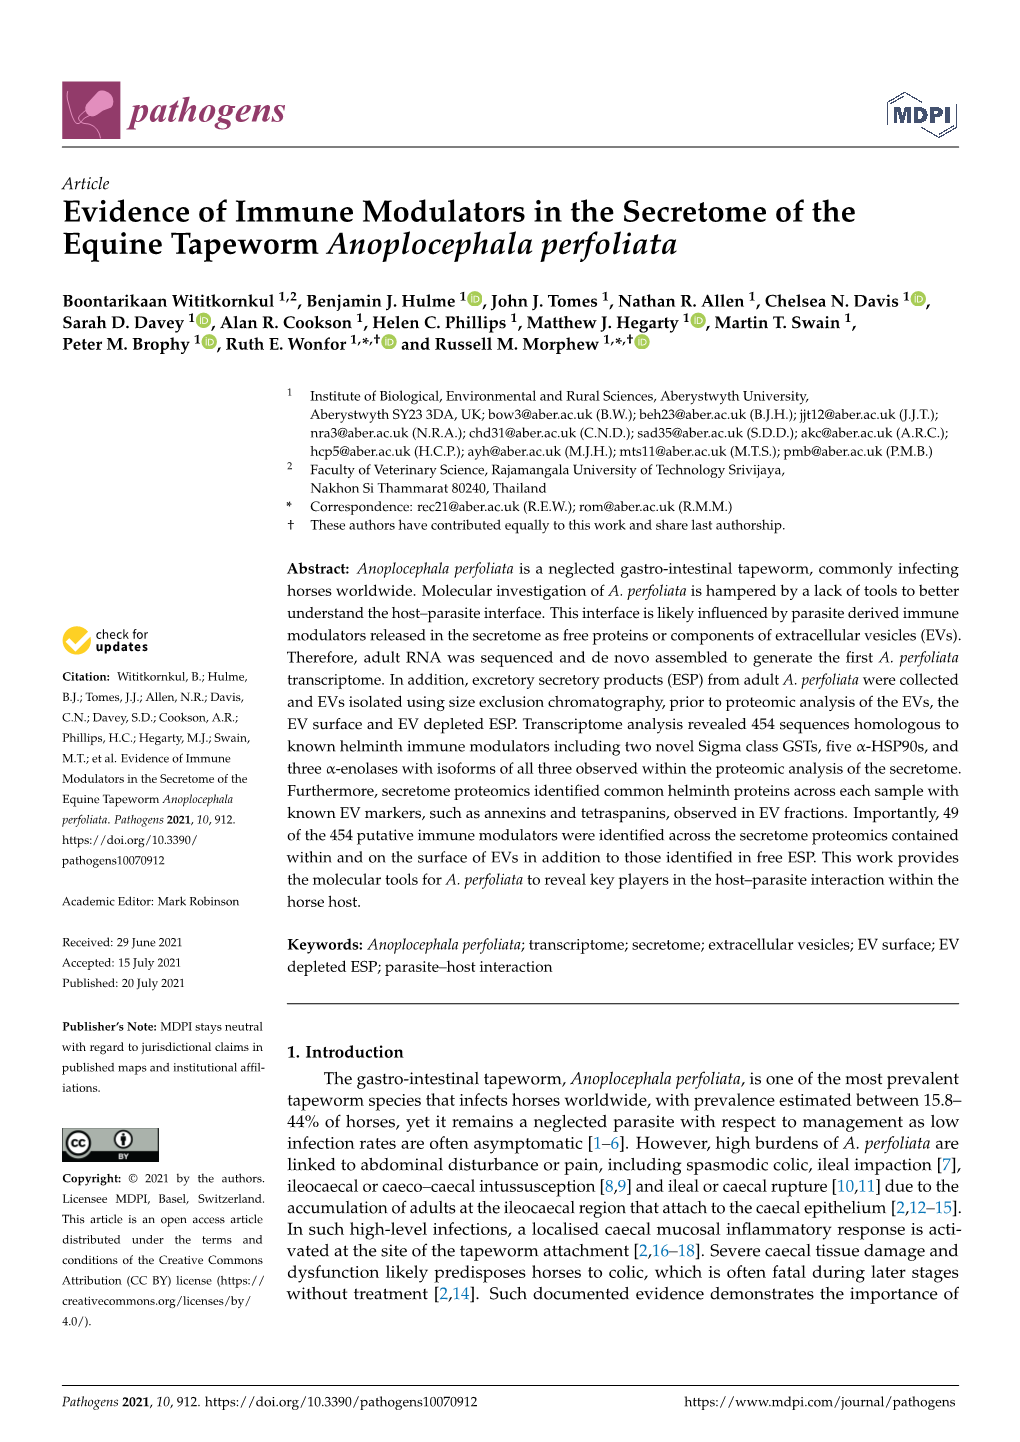 Evidence of Immune Modulators in the Secretome of the Equine Tapeworm Anoplocephala Perfoliata